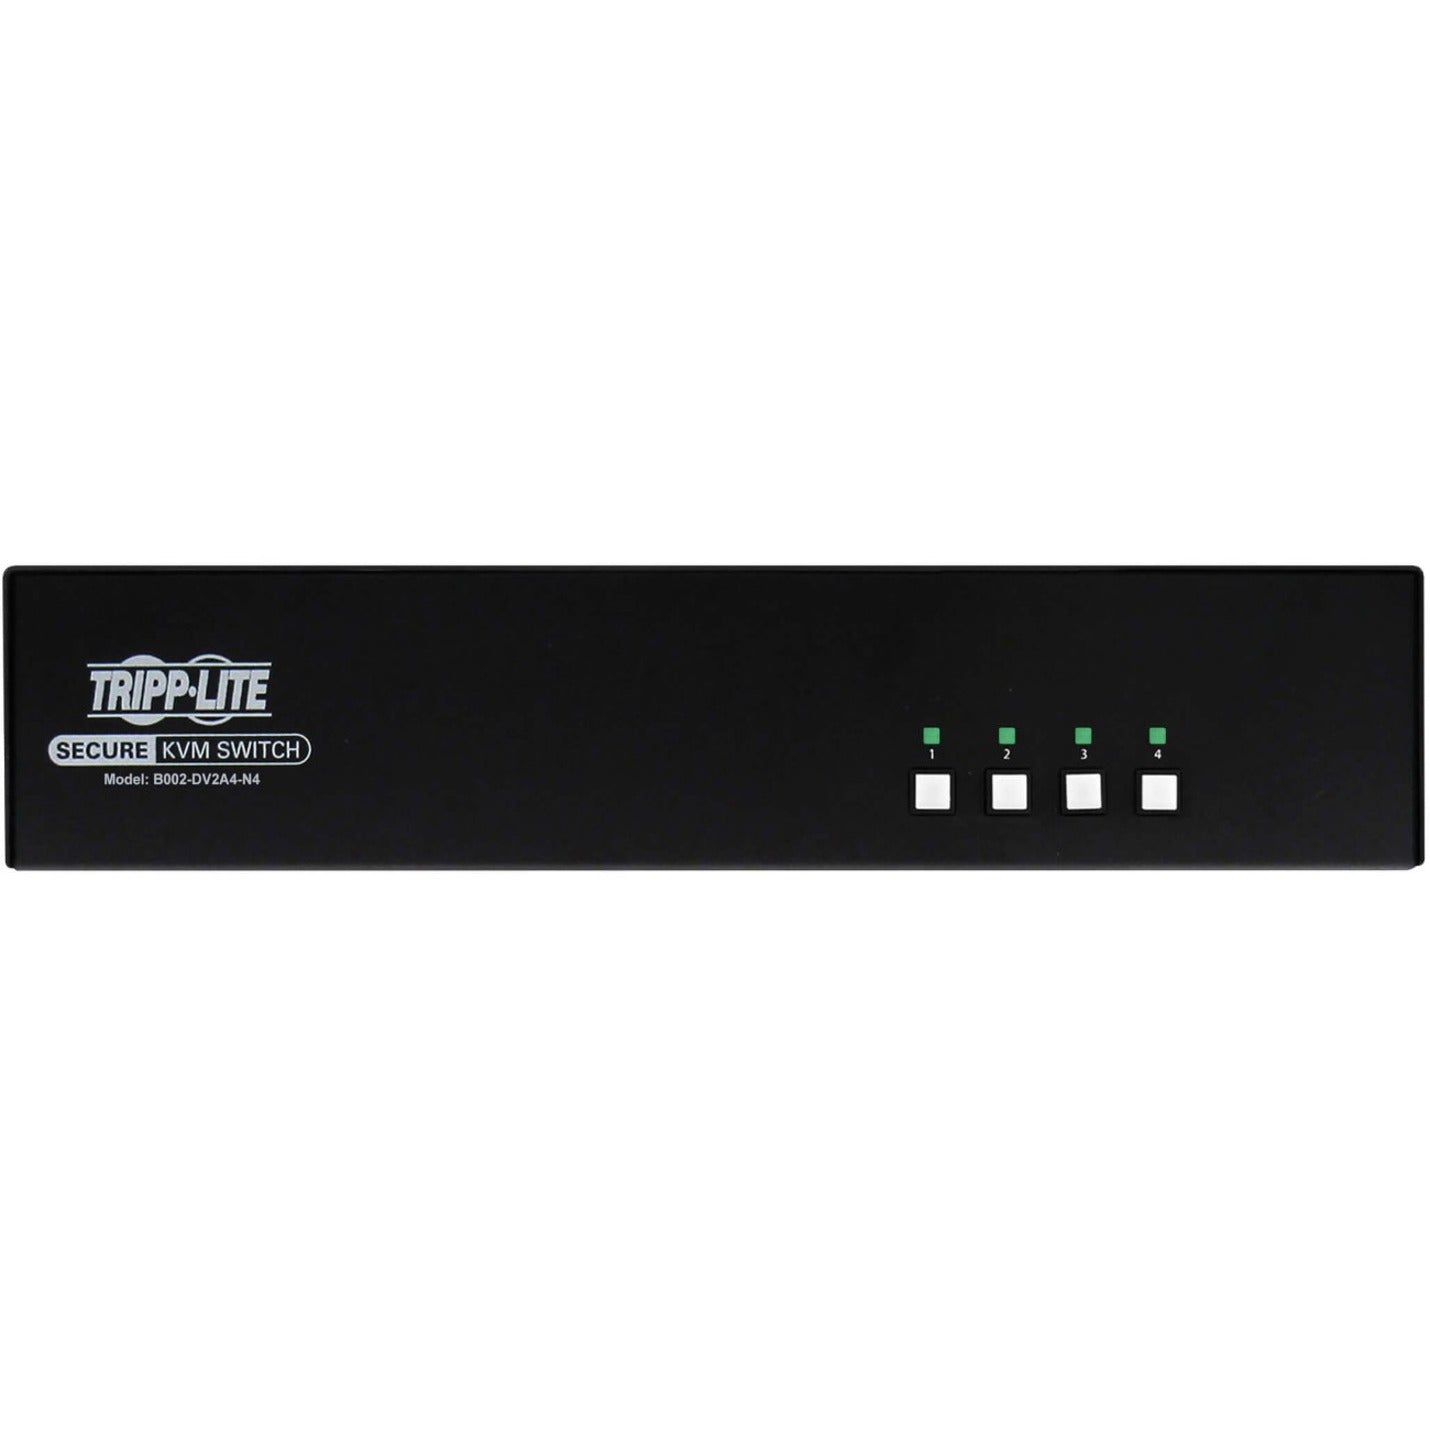 Tripp Lite B002-DV2A4-N4 Secure KVM Switch 4-Port Dual-Head DVI to DVI NIAP PP4.0 TAA, Maximum Video Resolution 2560 x 1600, 3 Year Warranty